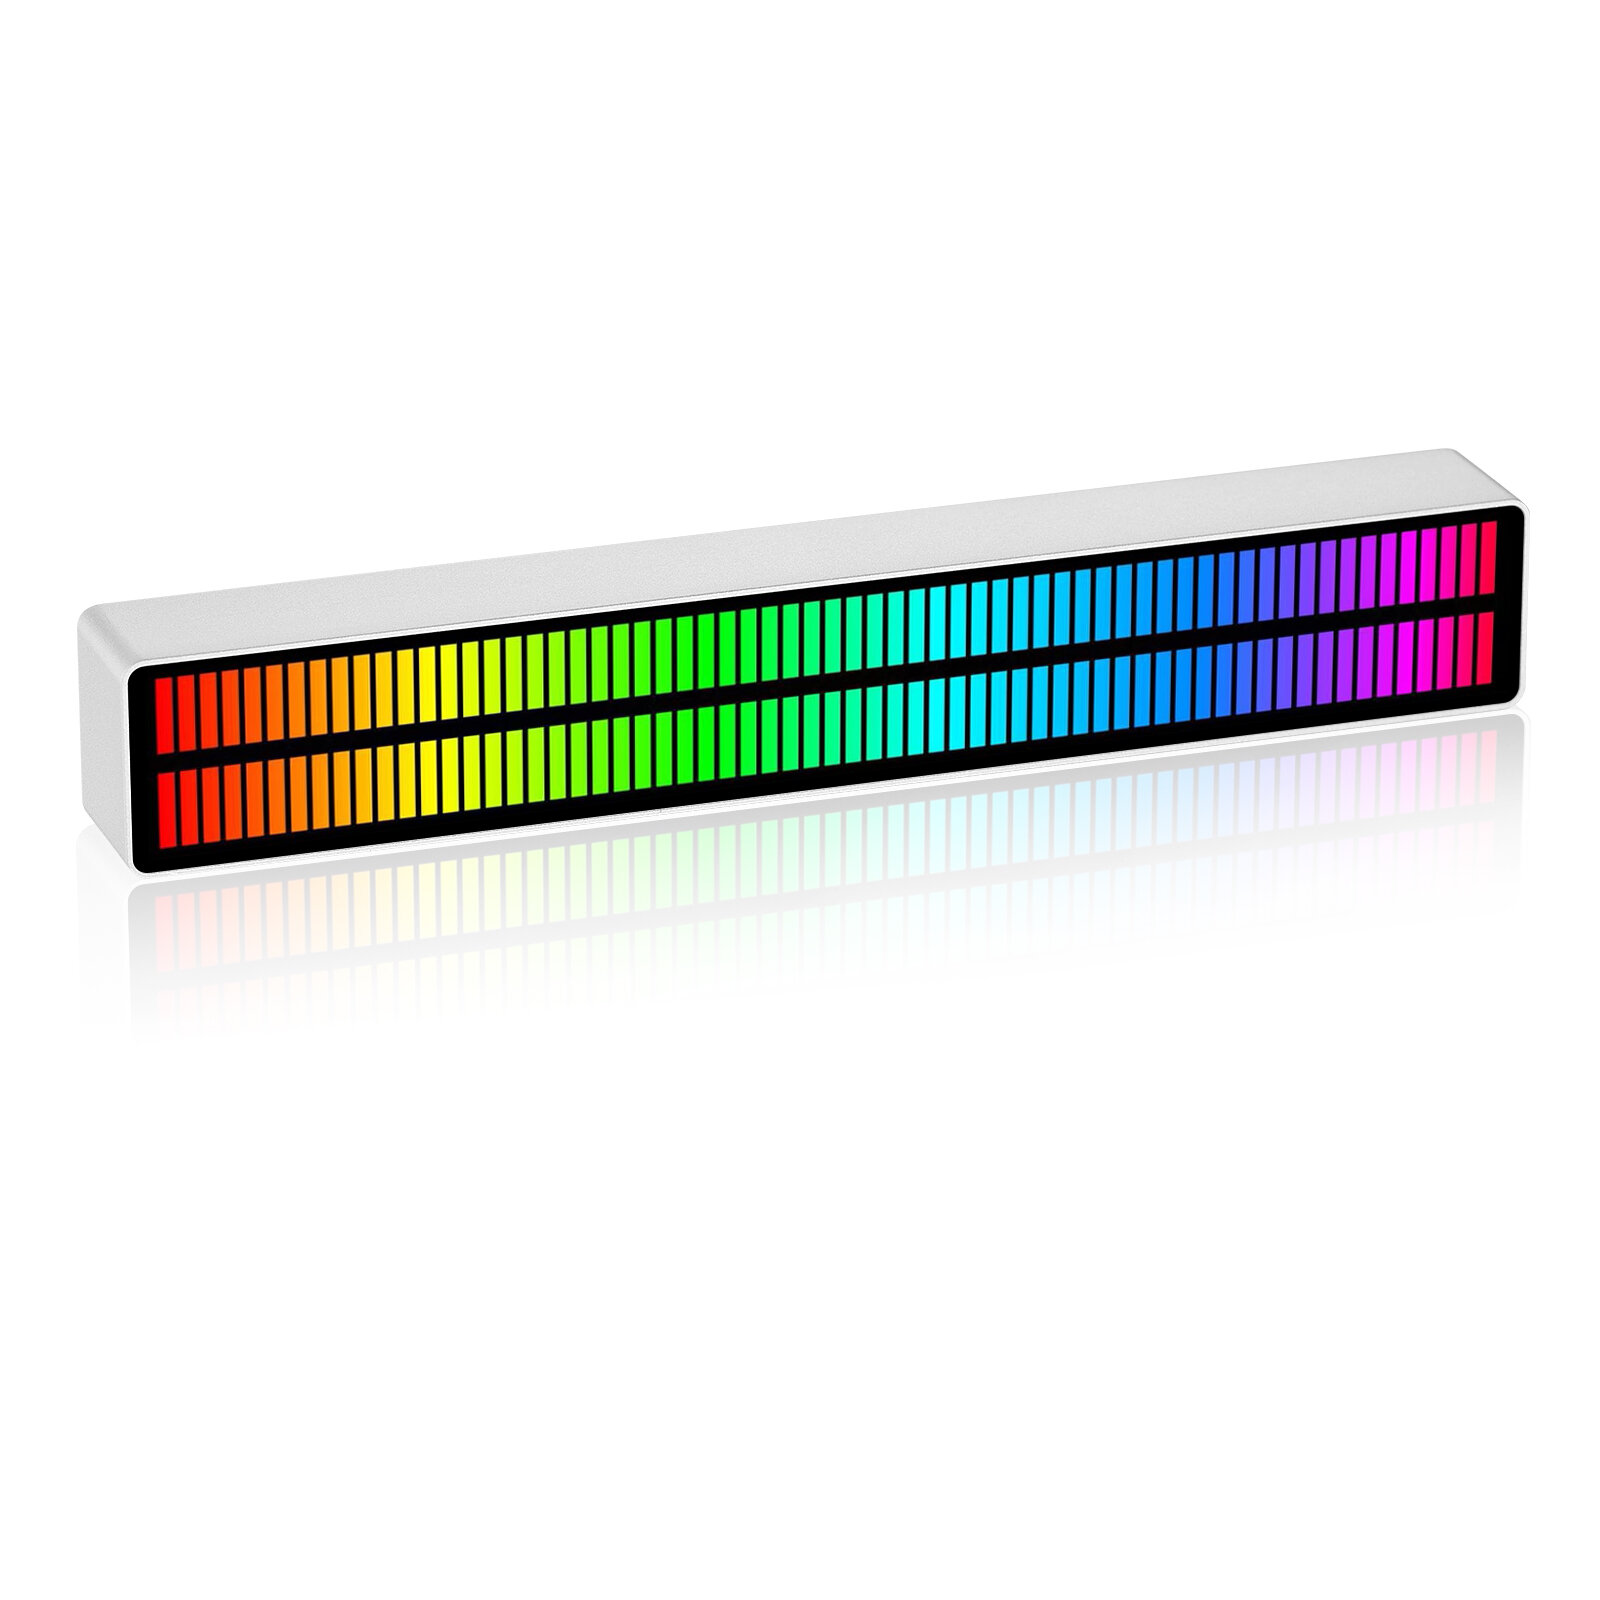 

10W USB Pickup Rhythm Lamp Audio LED Level Meter Display Spectrum Analyzer RGB LED Music Spectrum Indicator